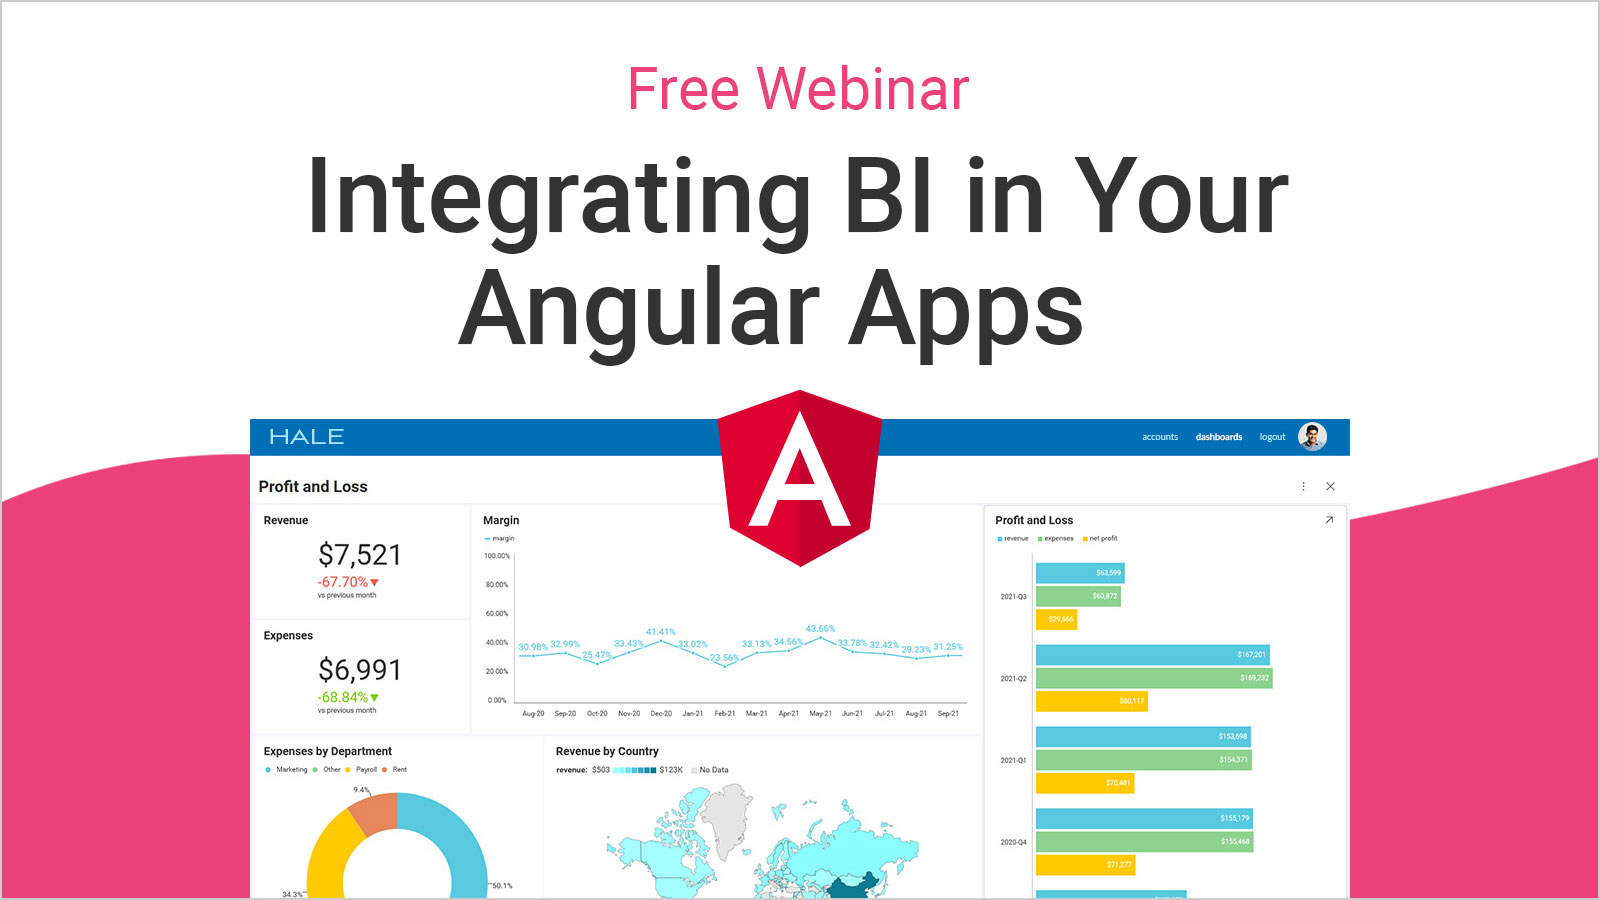 Integrating BI in Your Angular Apps